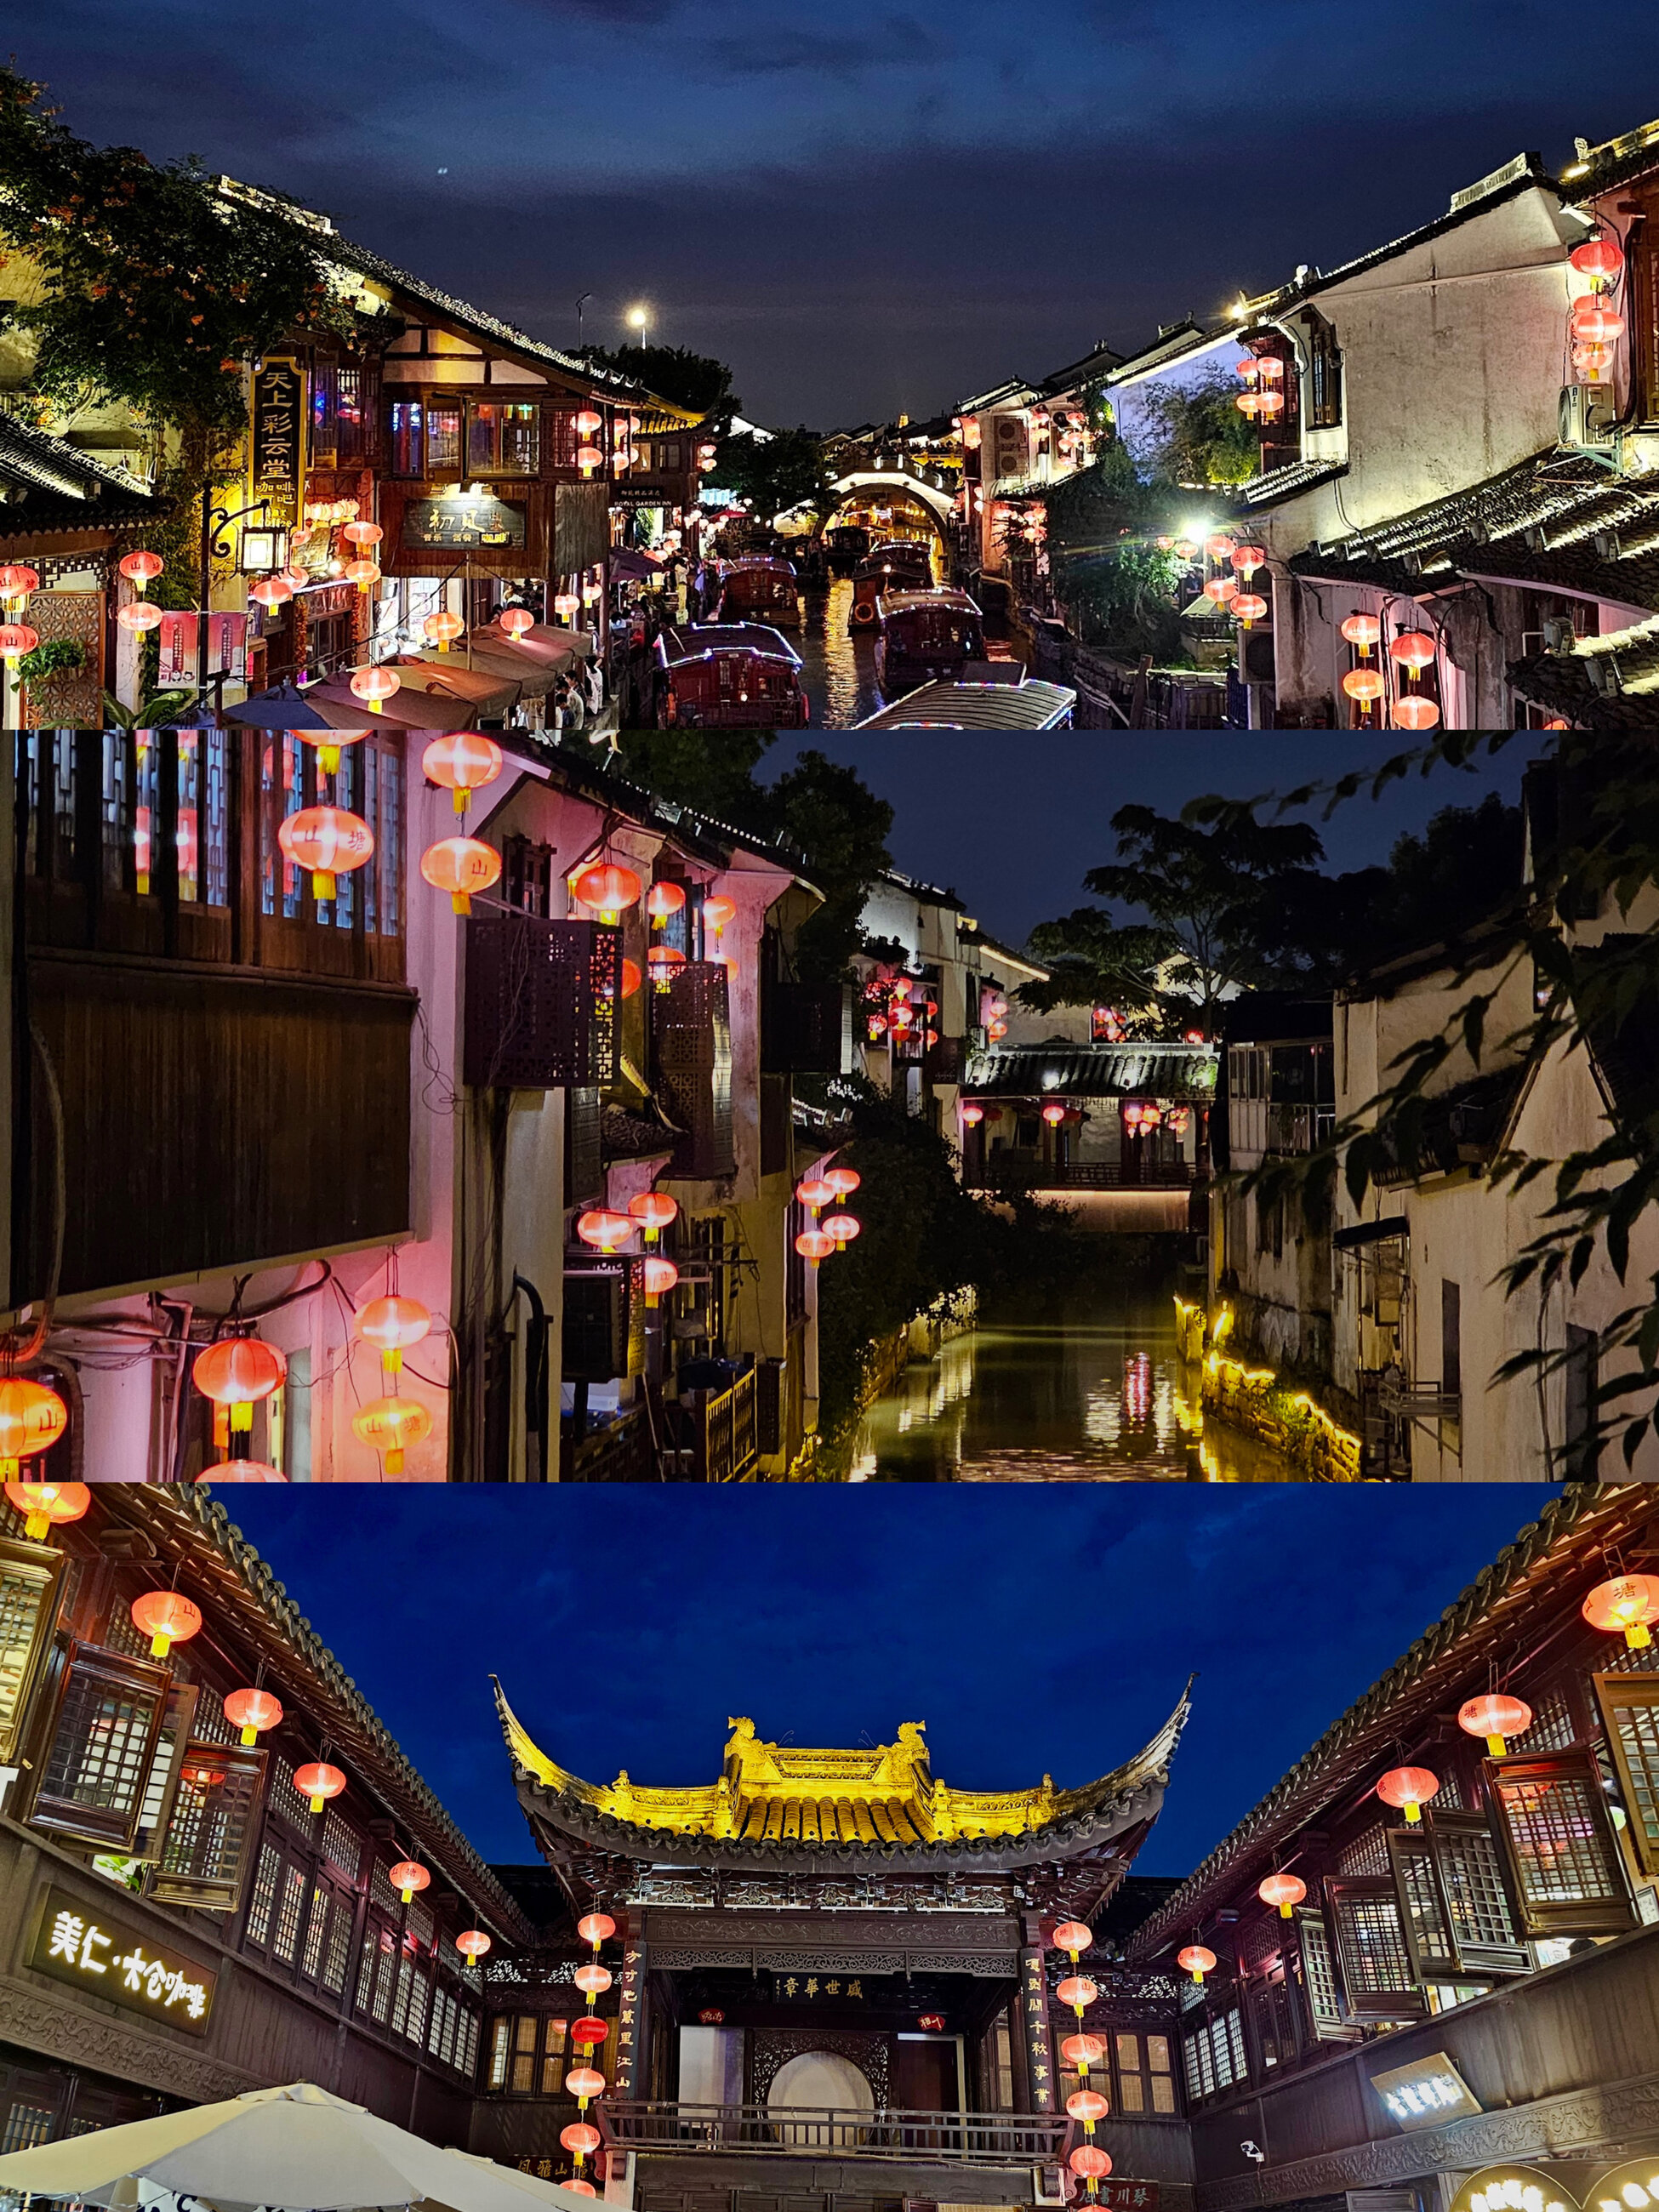 Suzhou ancient town